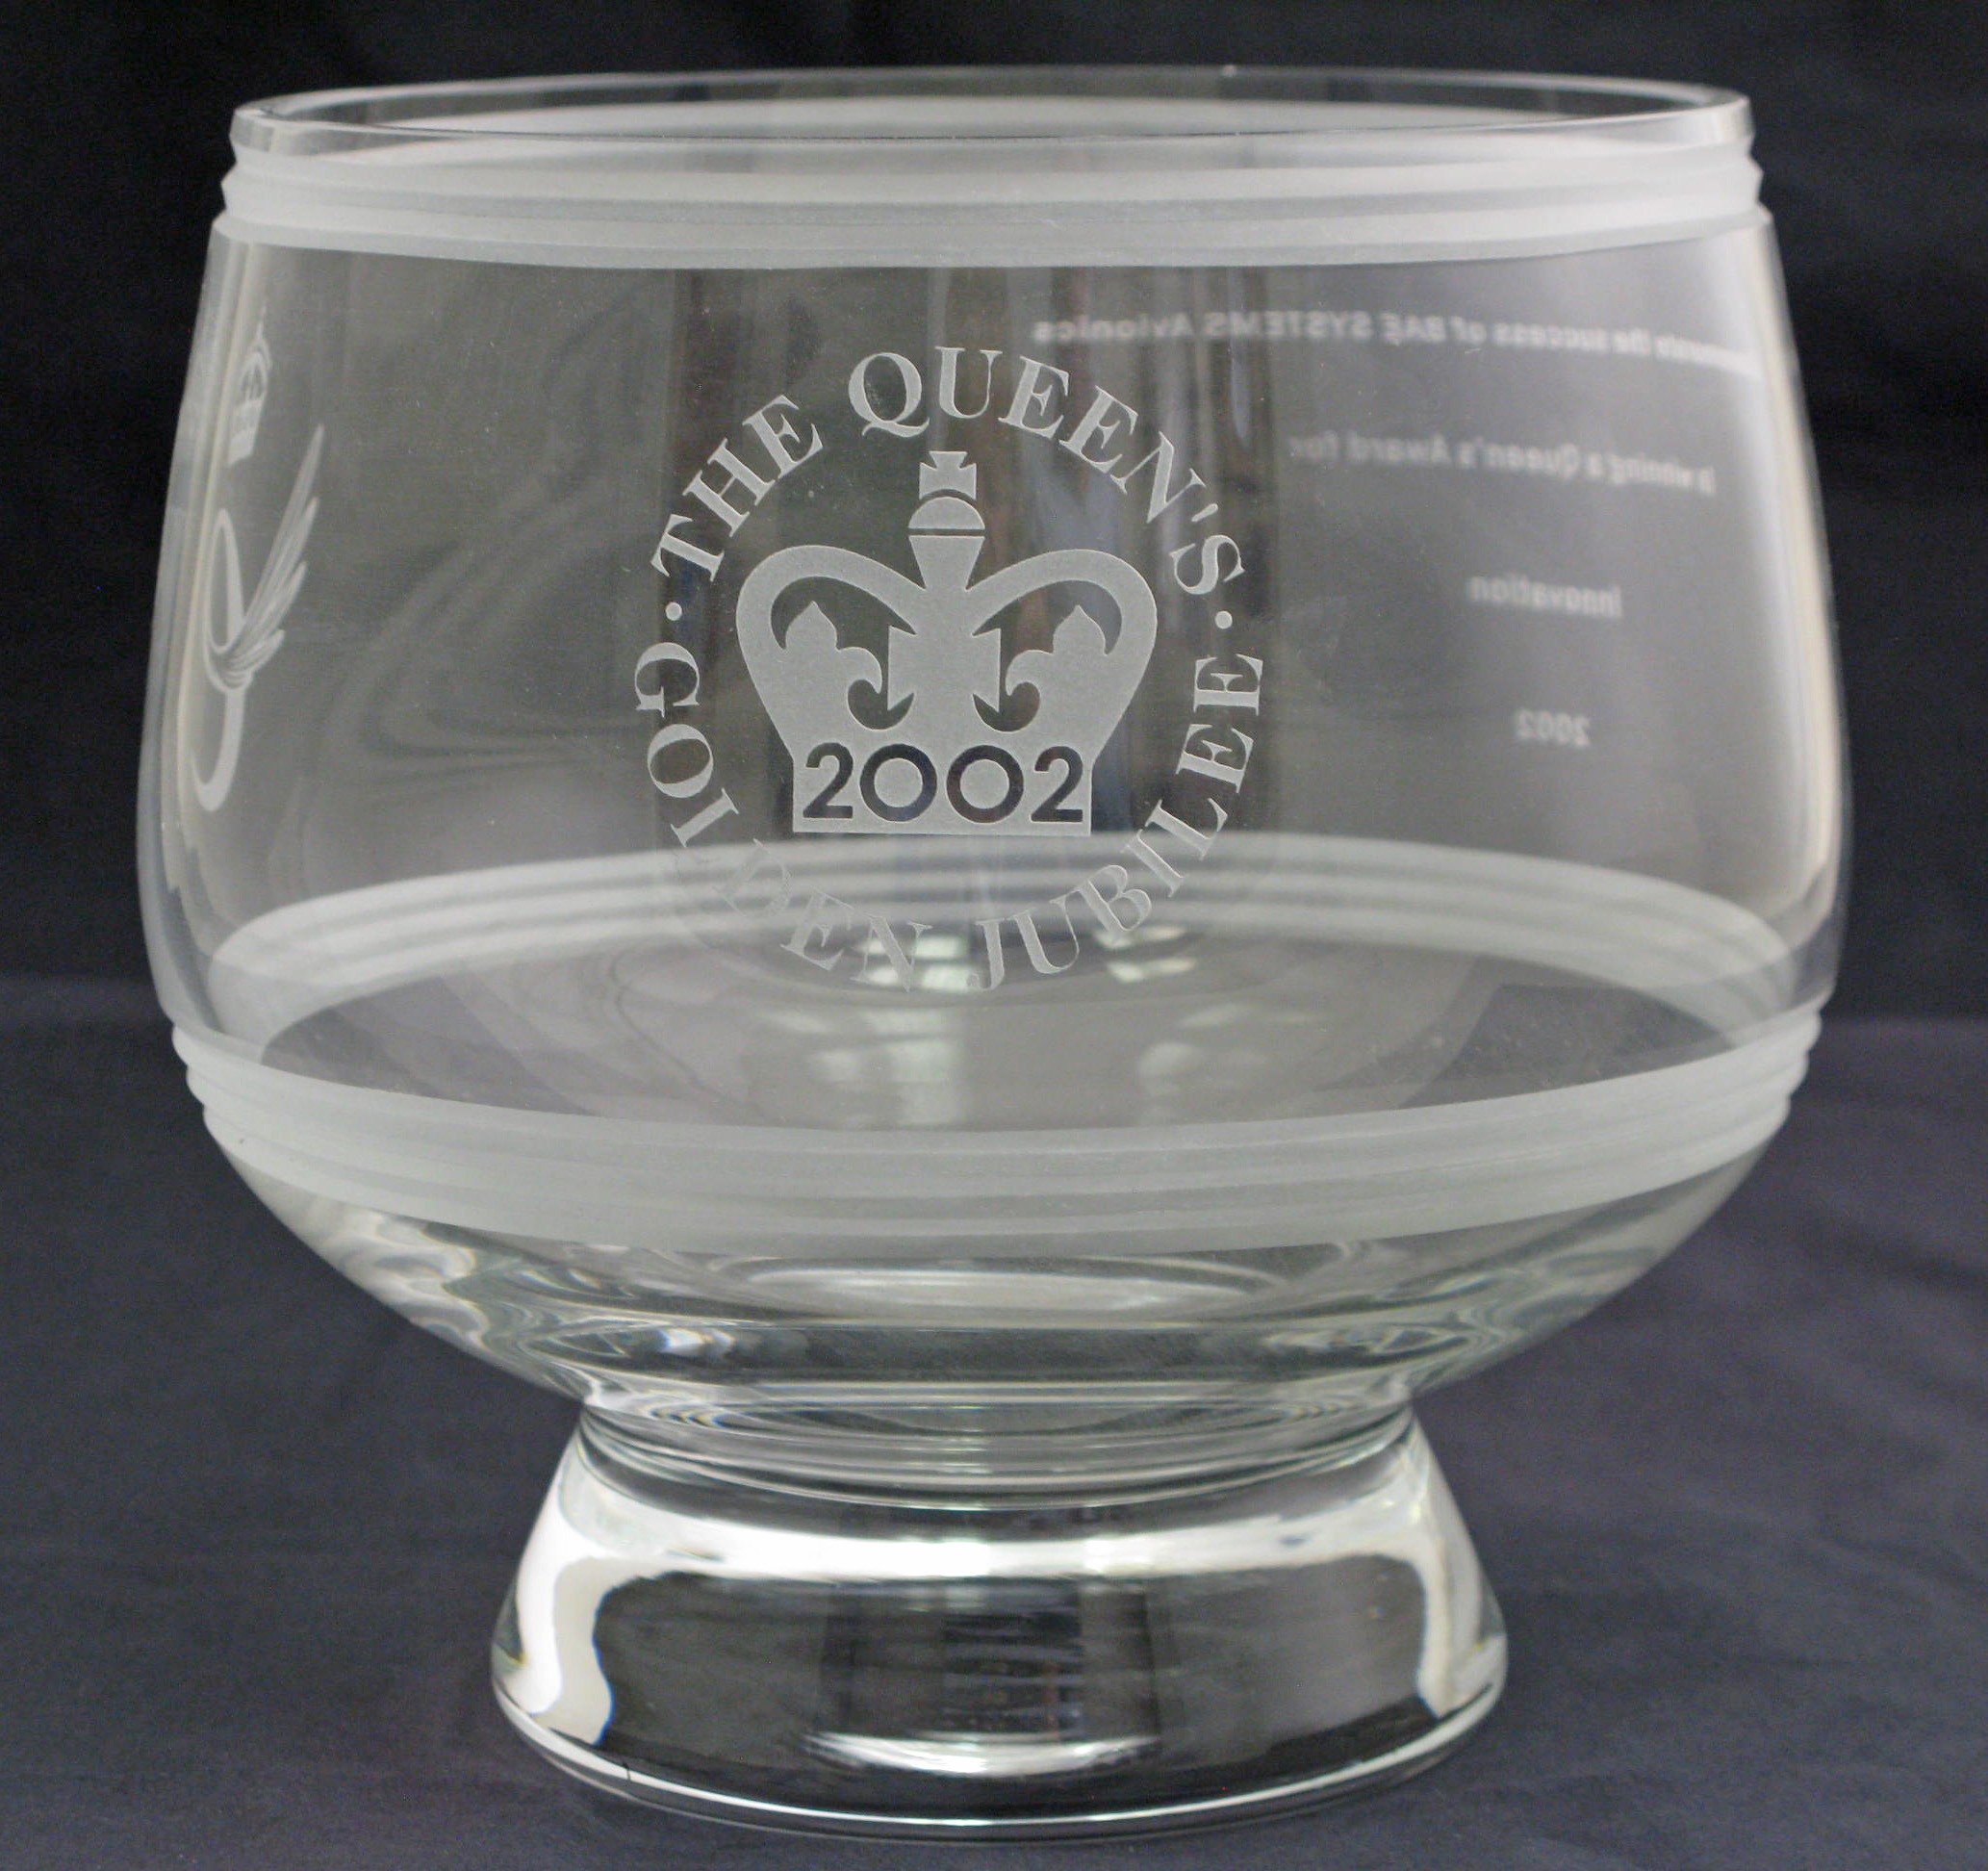 Queen's Award for Innovation Glass Bowl for 2002